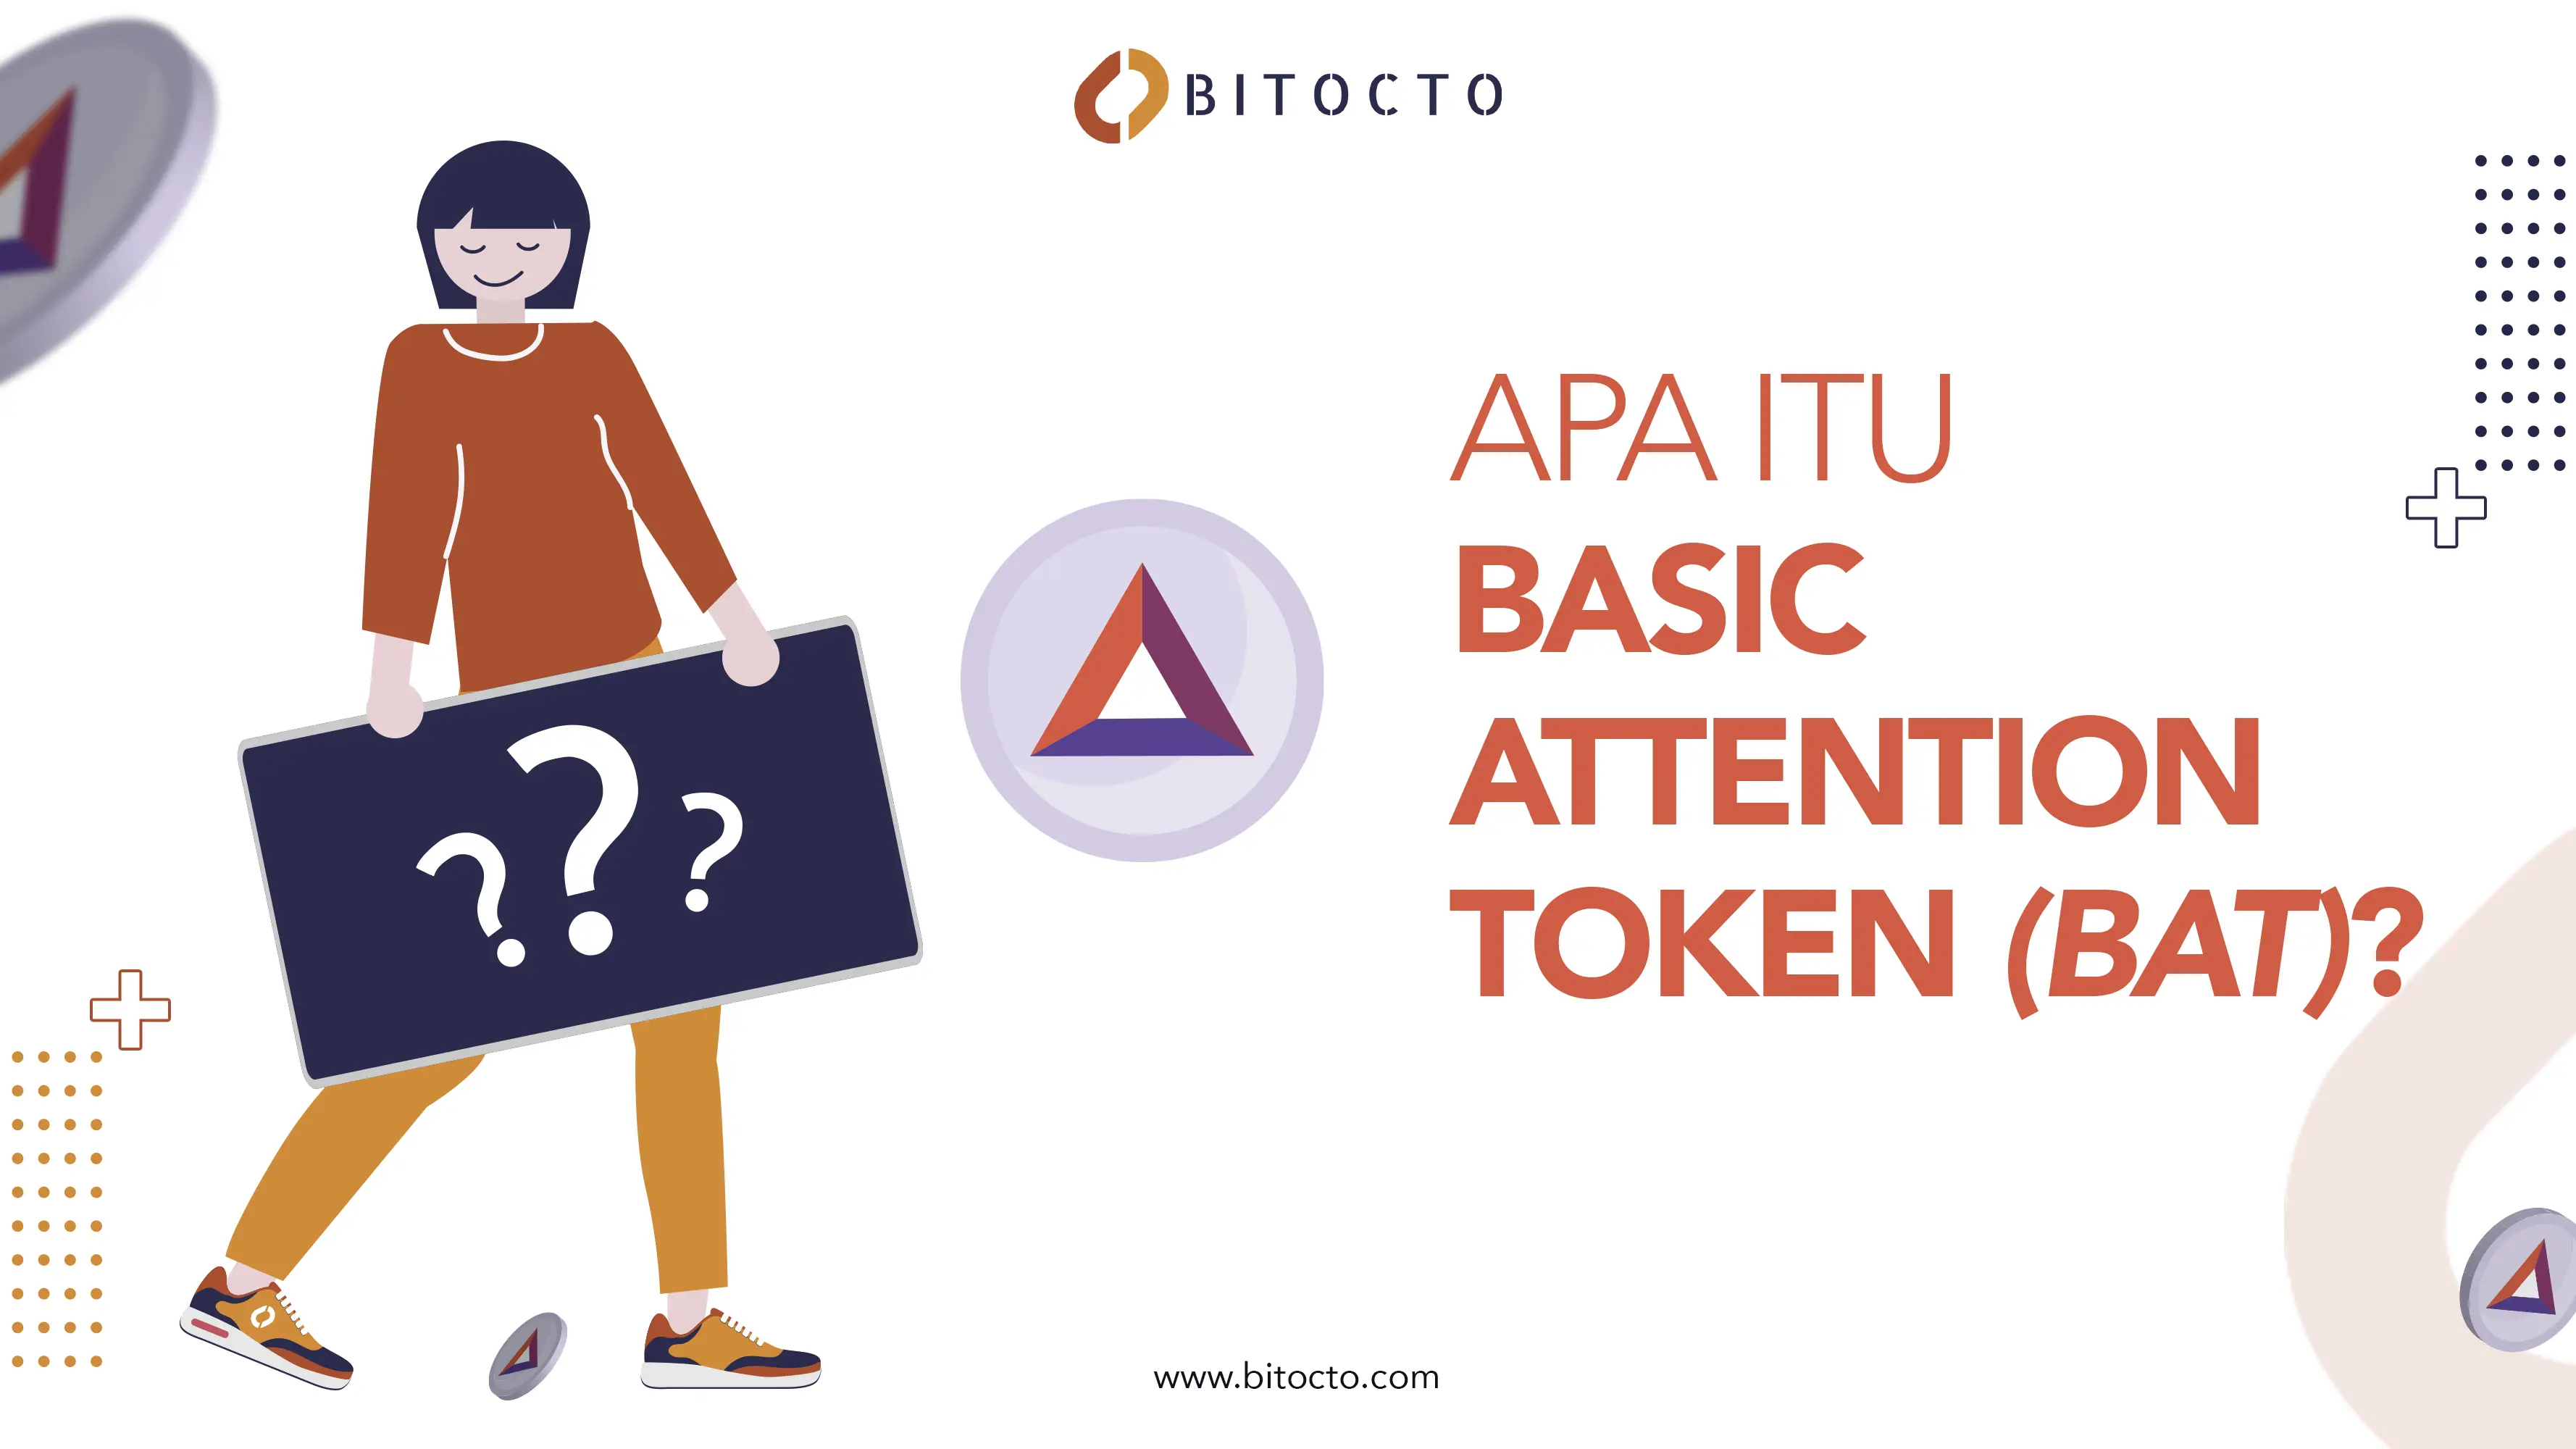 Basic attention token